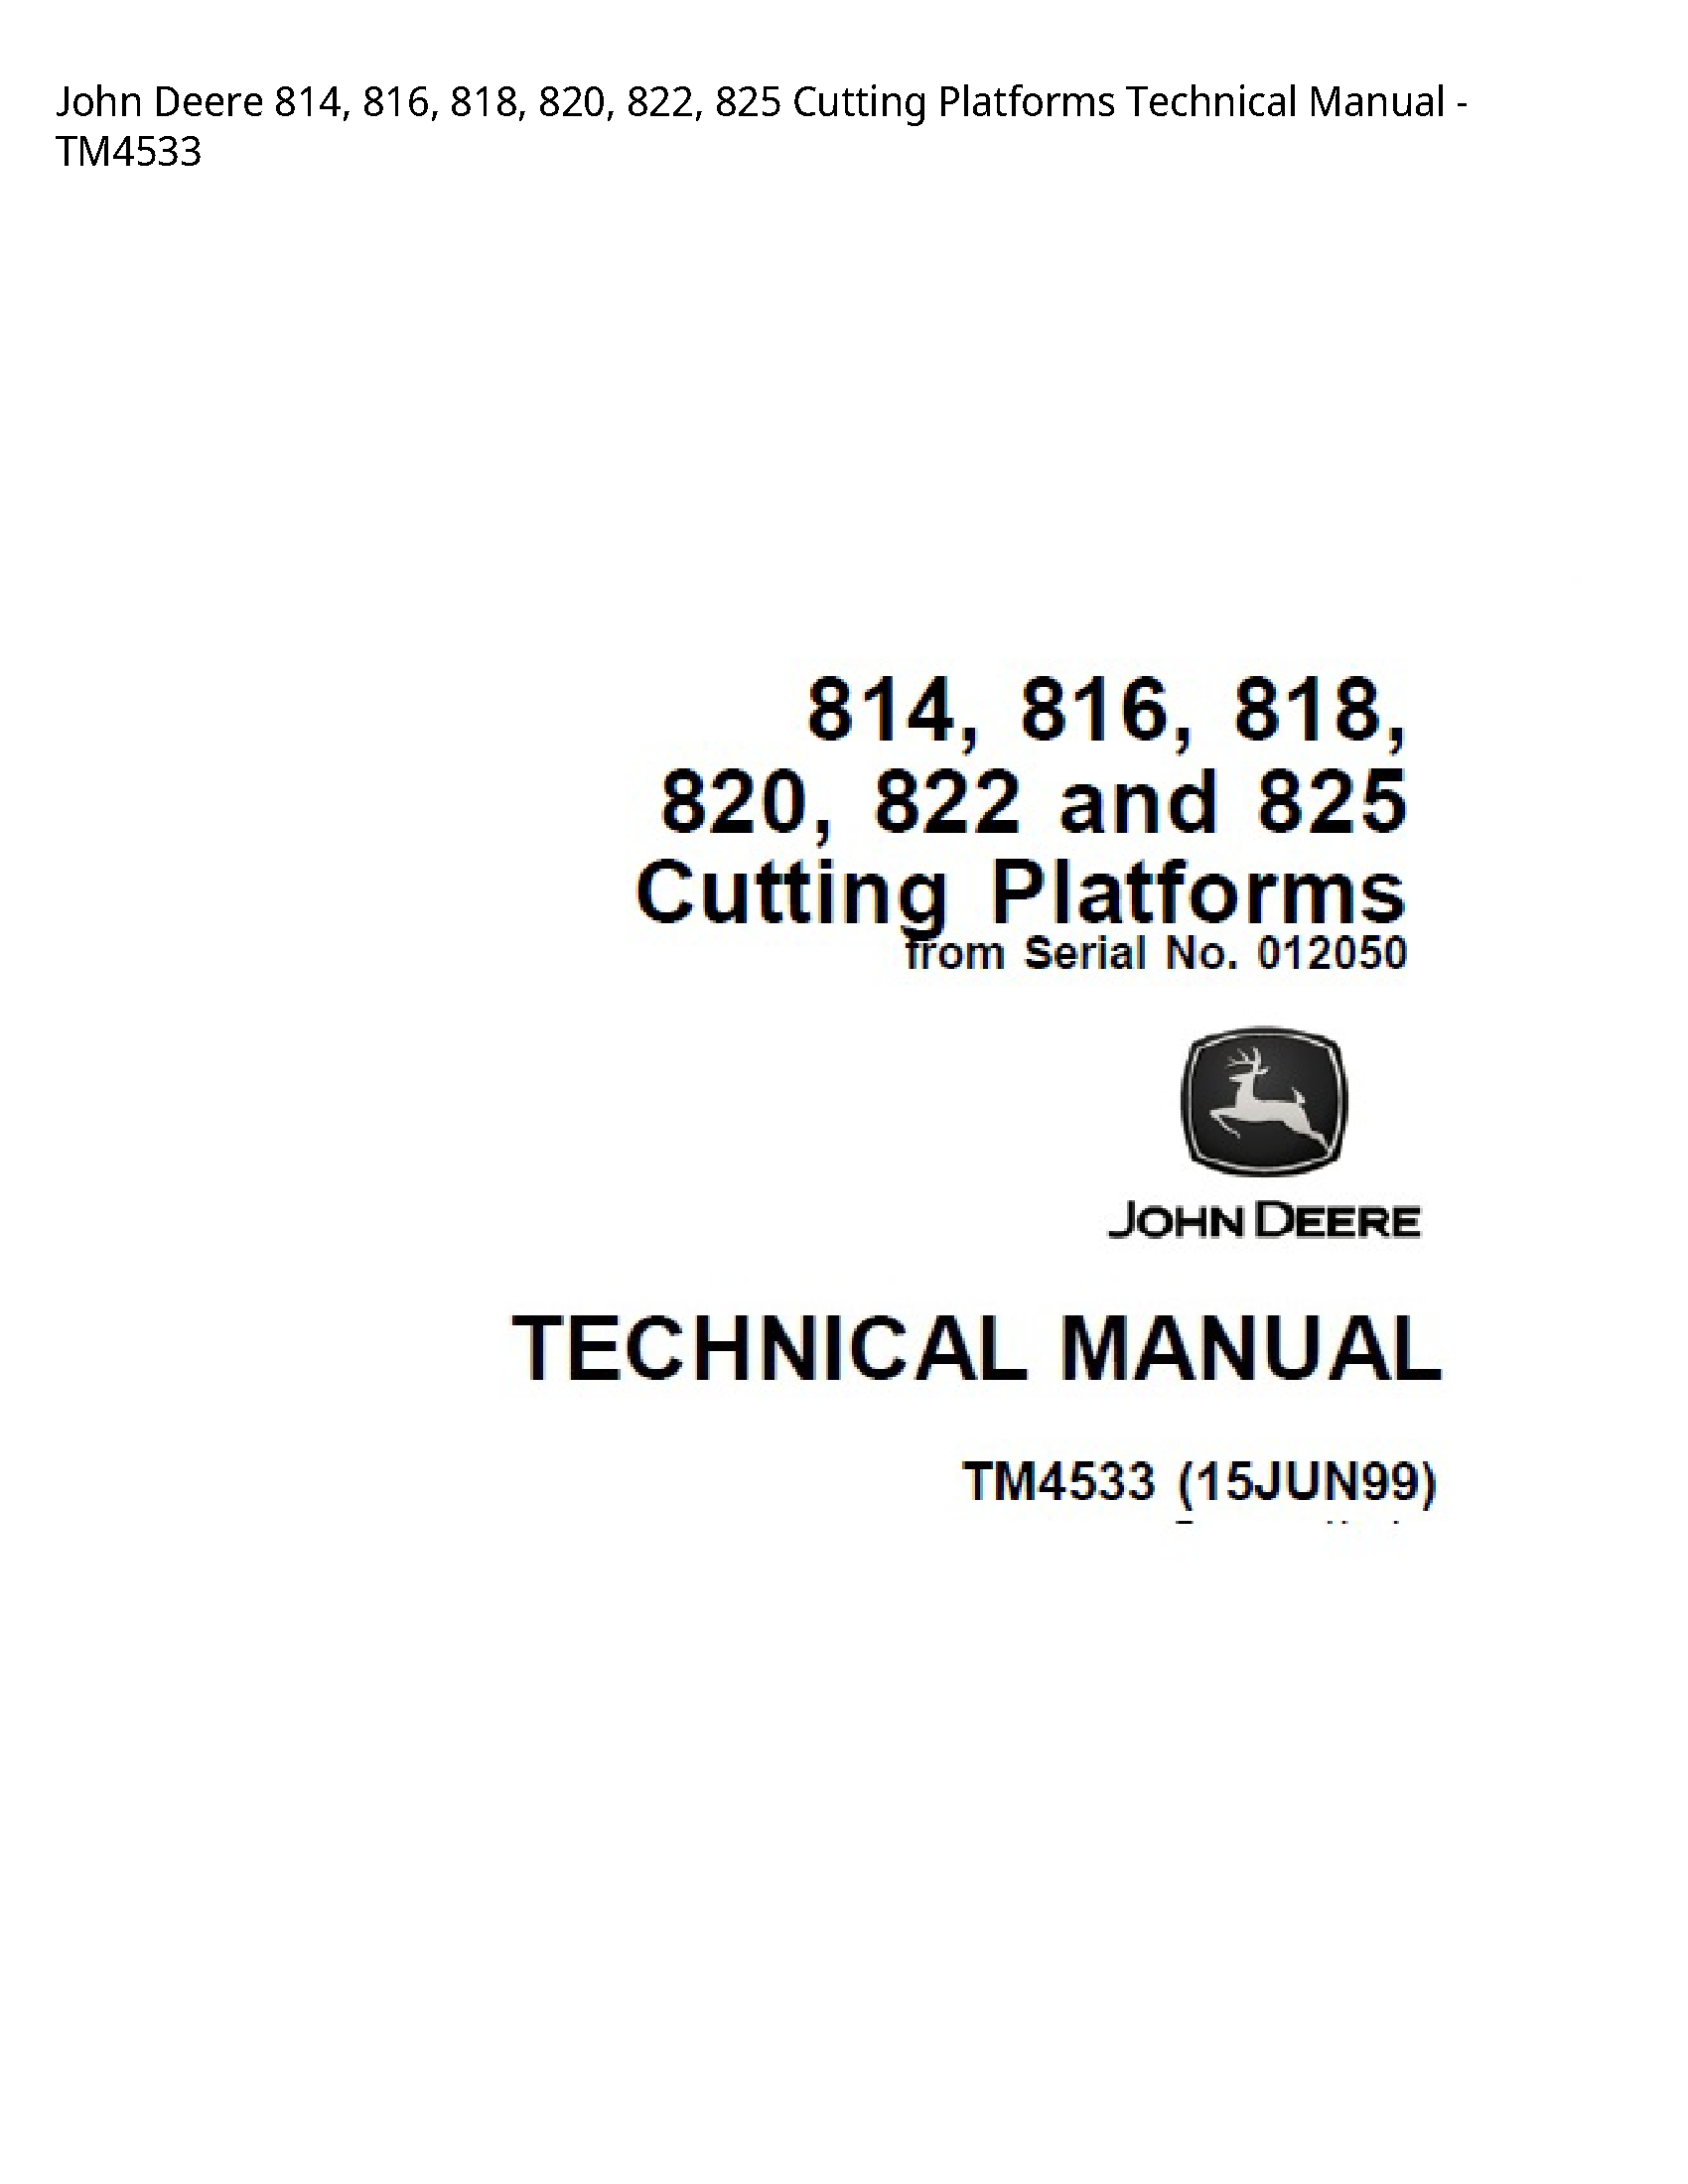 John Deere 814 Cutting Platforms Technical manual